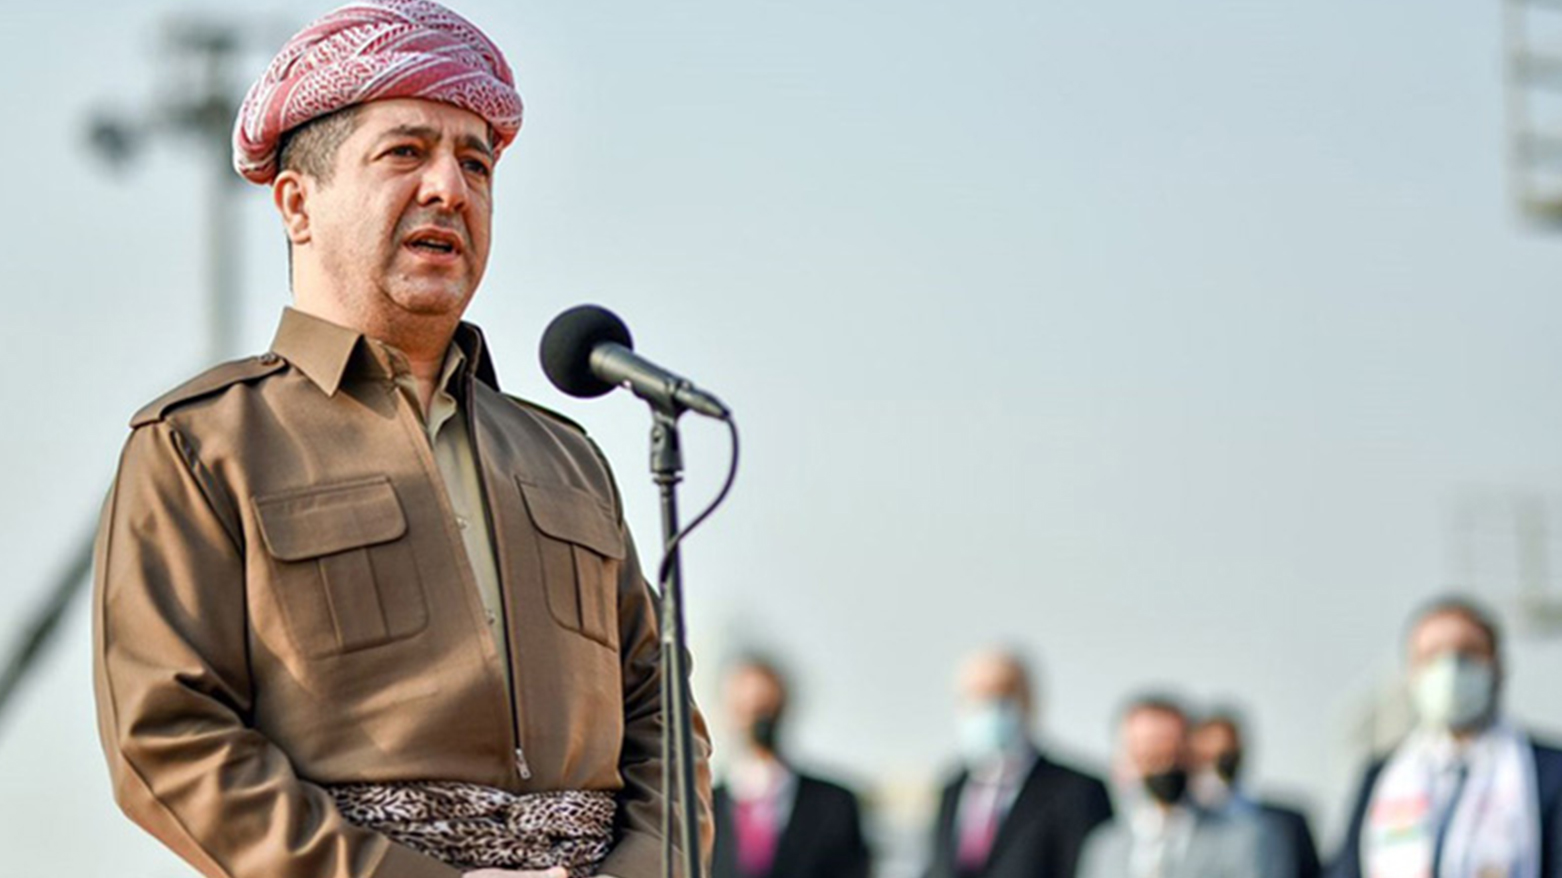 Kurdistan Region Prime Minister Masrour Barzani. (Photo: KRG)